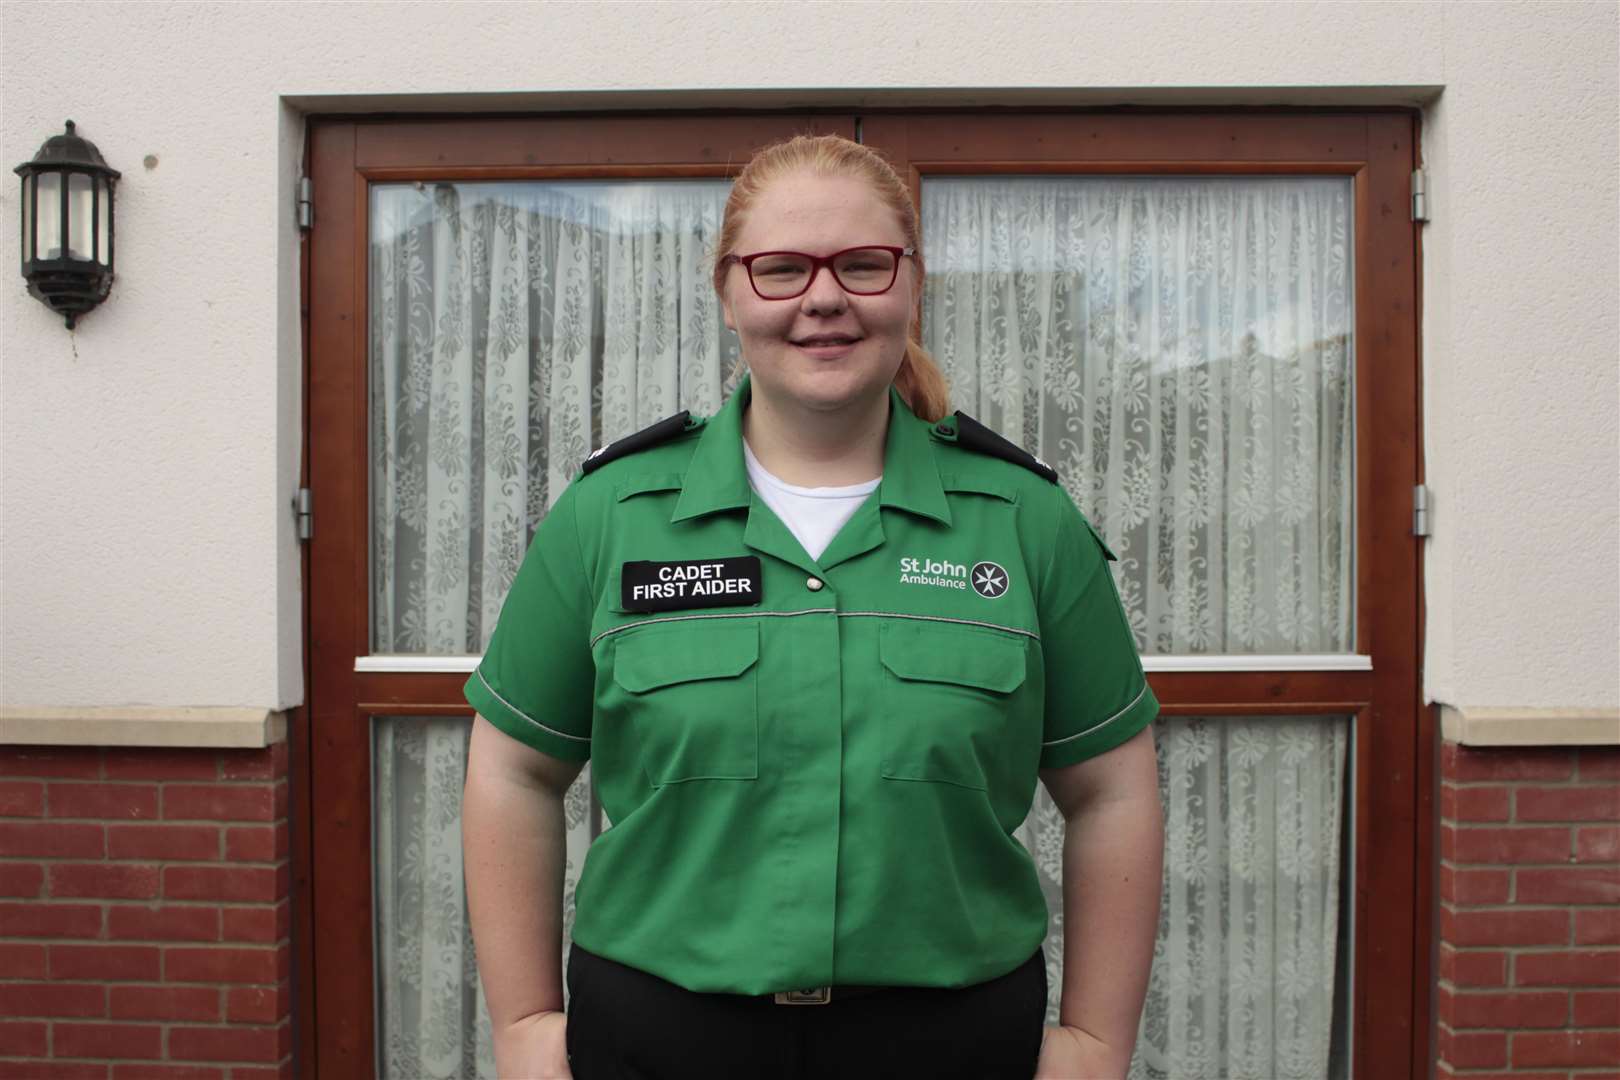 Charlotte Ellett in her St John Ambulance uniform